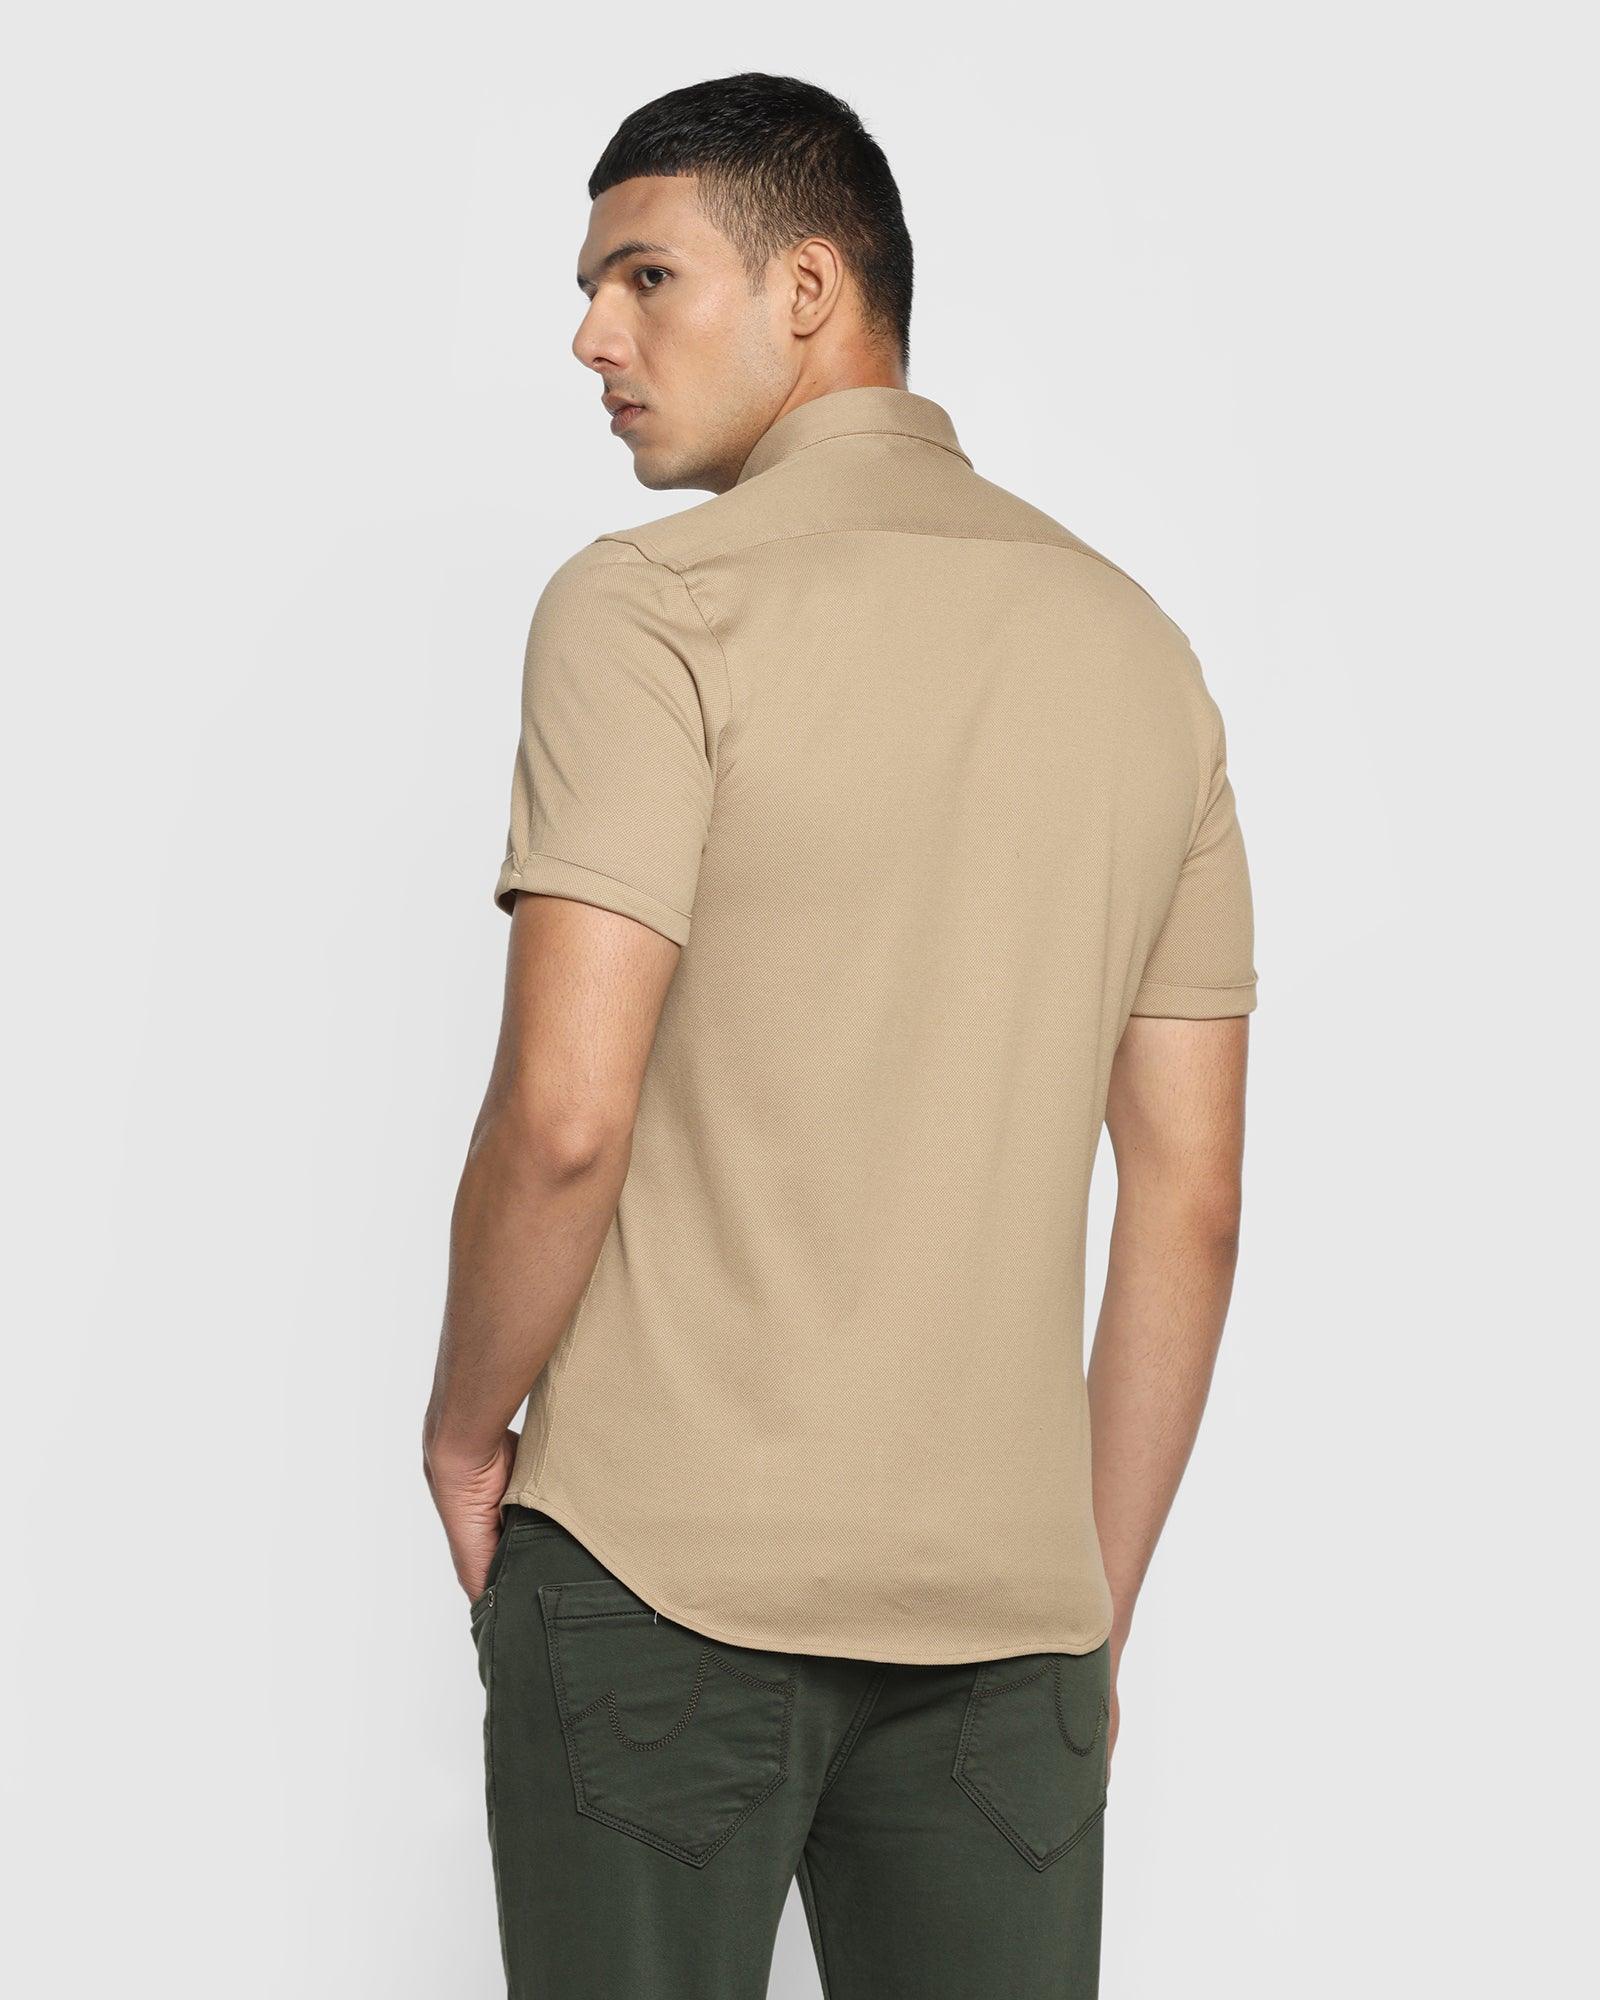 Formal Half Sleeve Beige Solid Shirt - Pareto